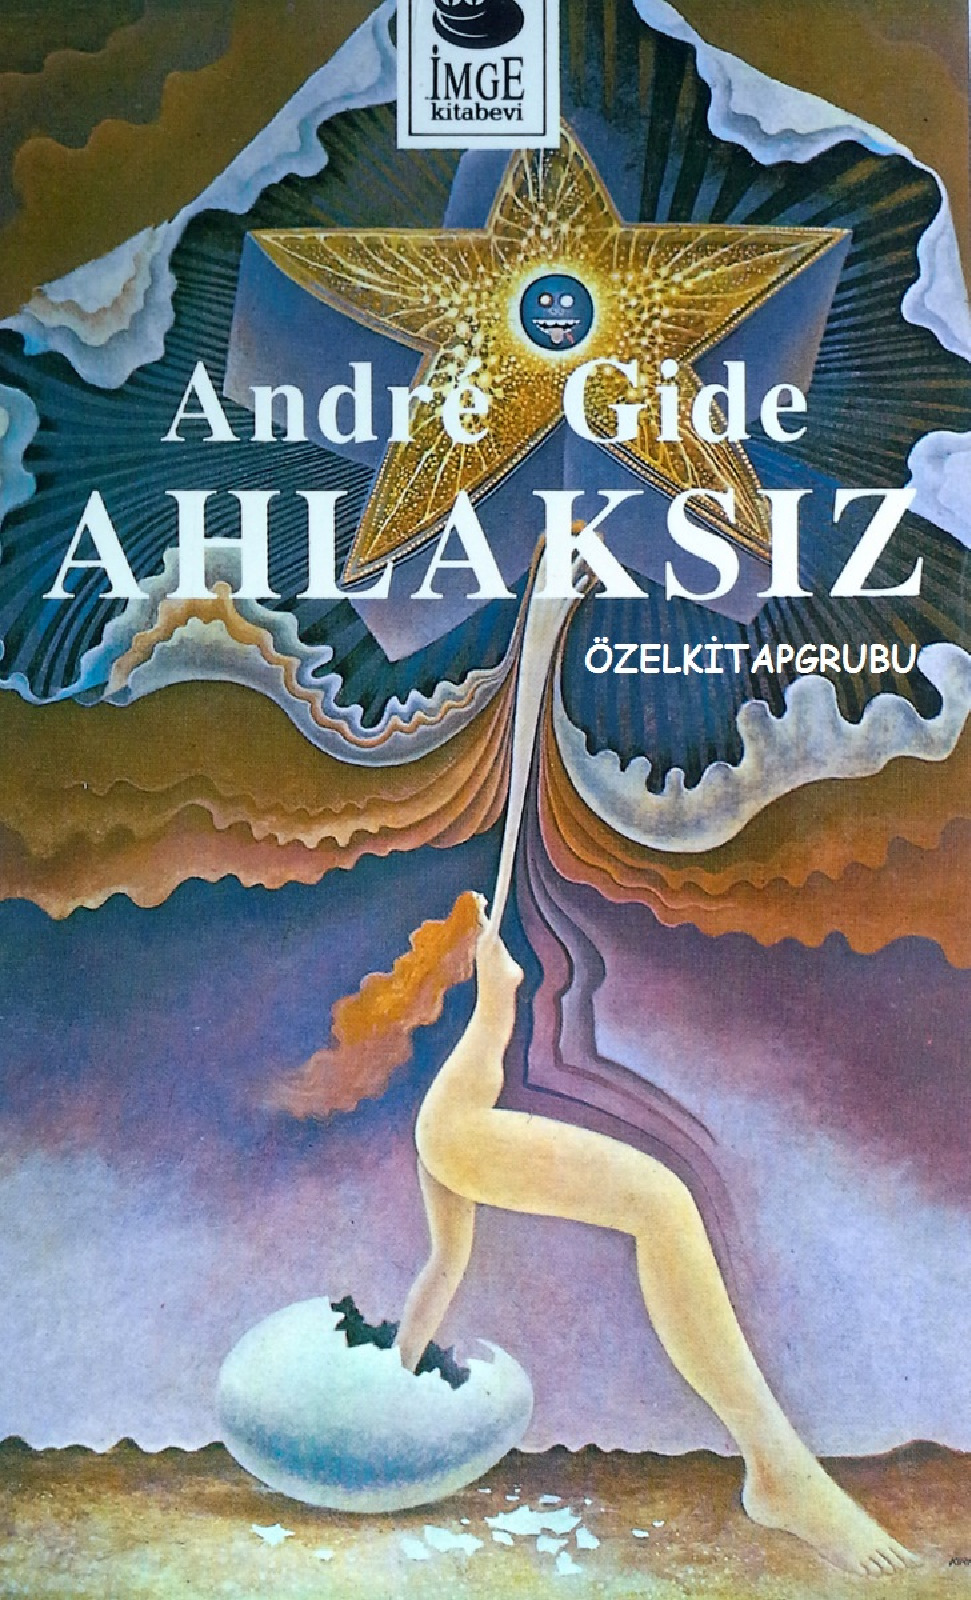 Exlaqsiz-Andre Gide-Mehmed Ali Ağaoğulları-1992-141s